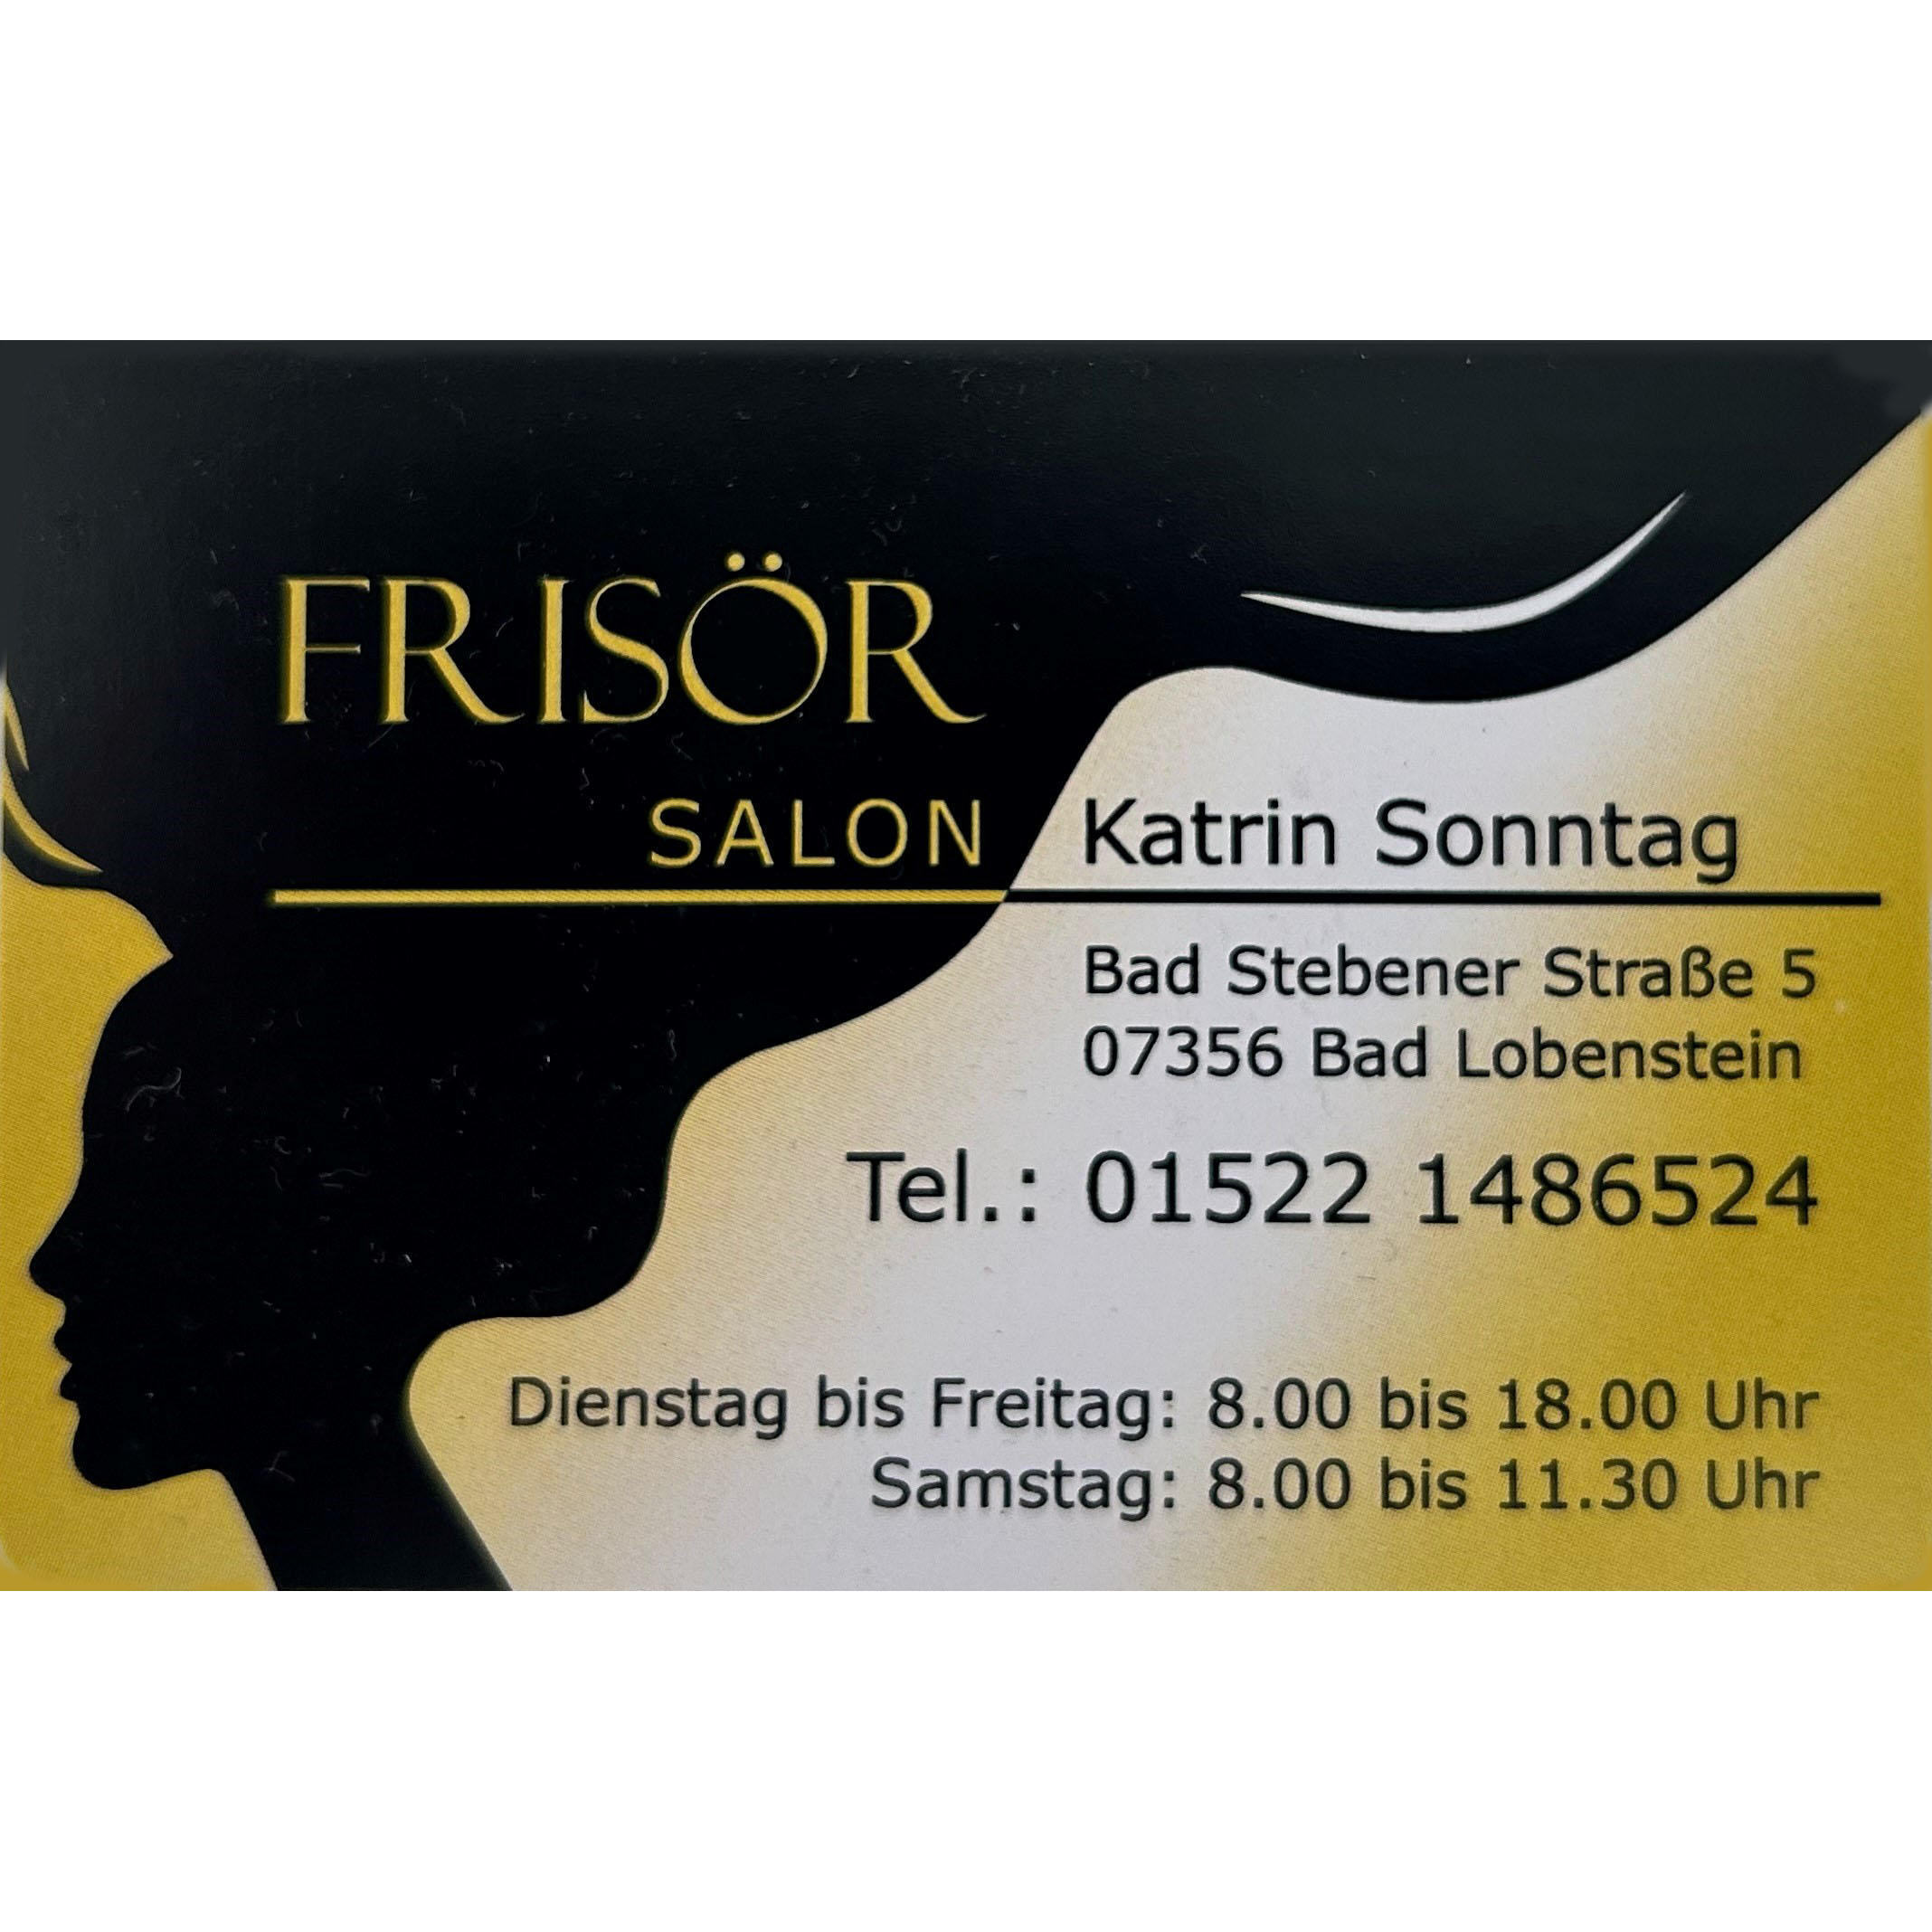 Friseur - Salon Katrin Sonntag in Bad Lobenstein - Logo